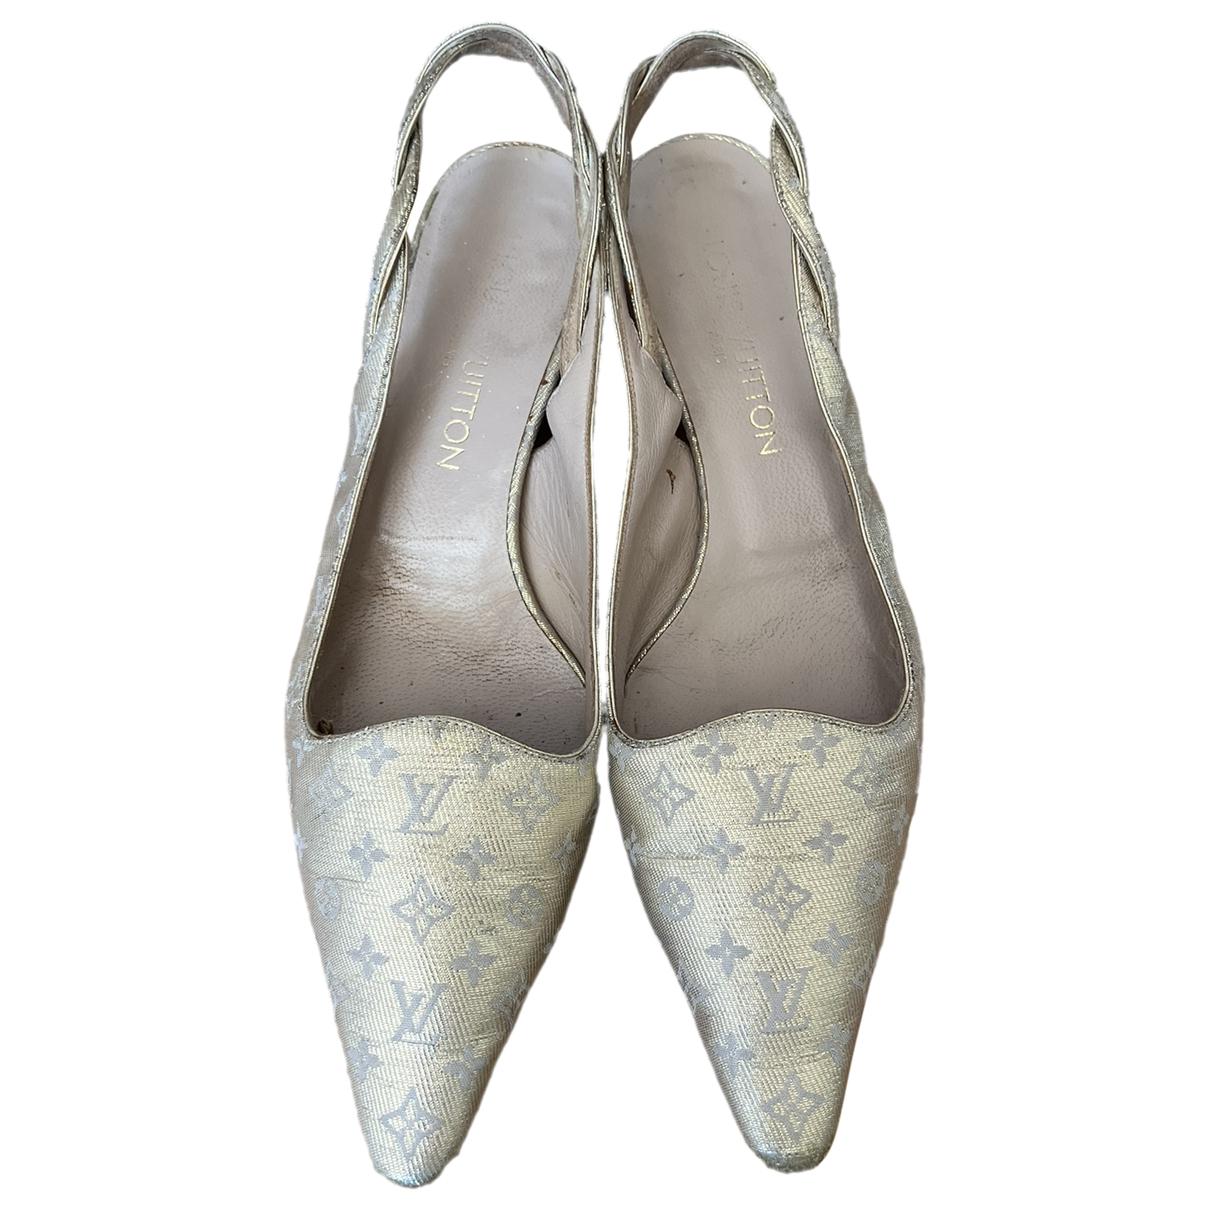 PAUSE or Skip: Louis Vuitton Archlight Sandals 2019 – PAUSE Online